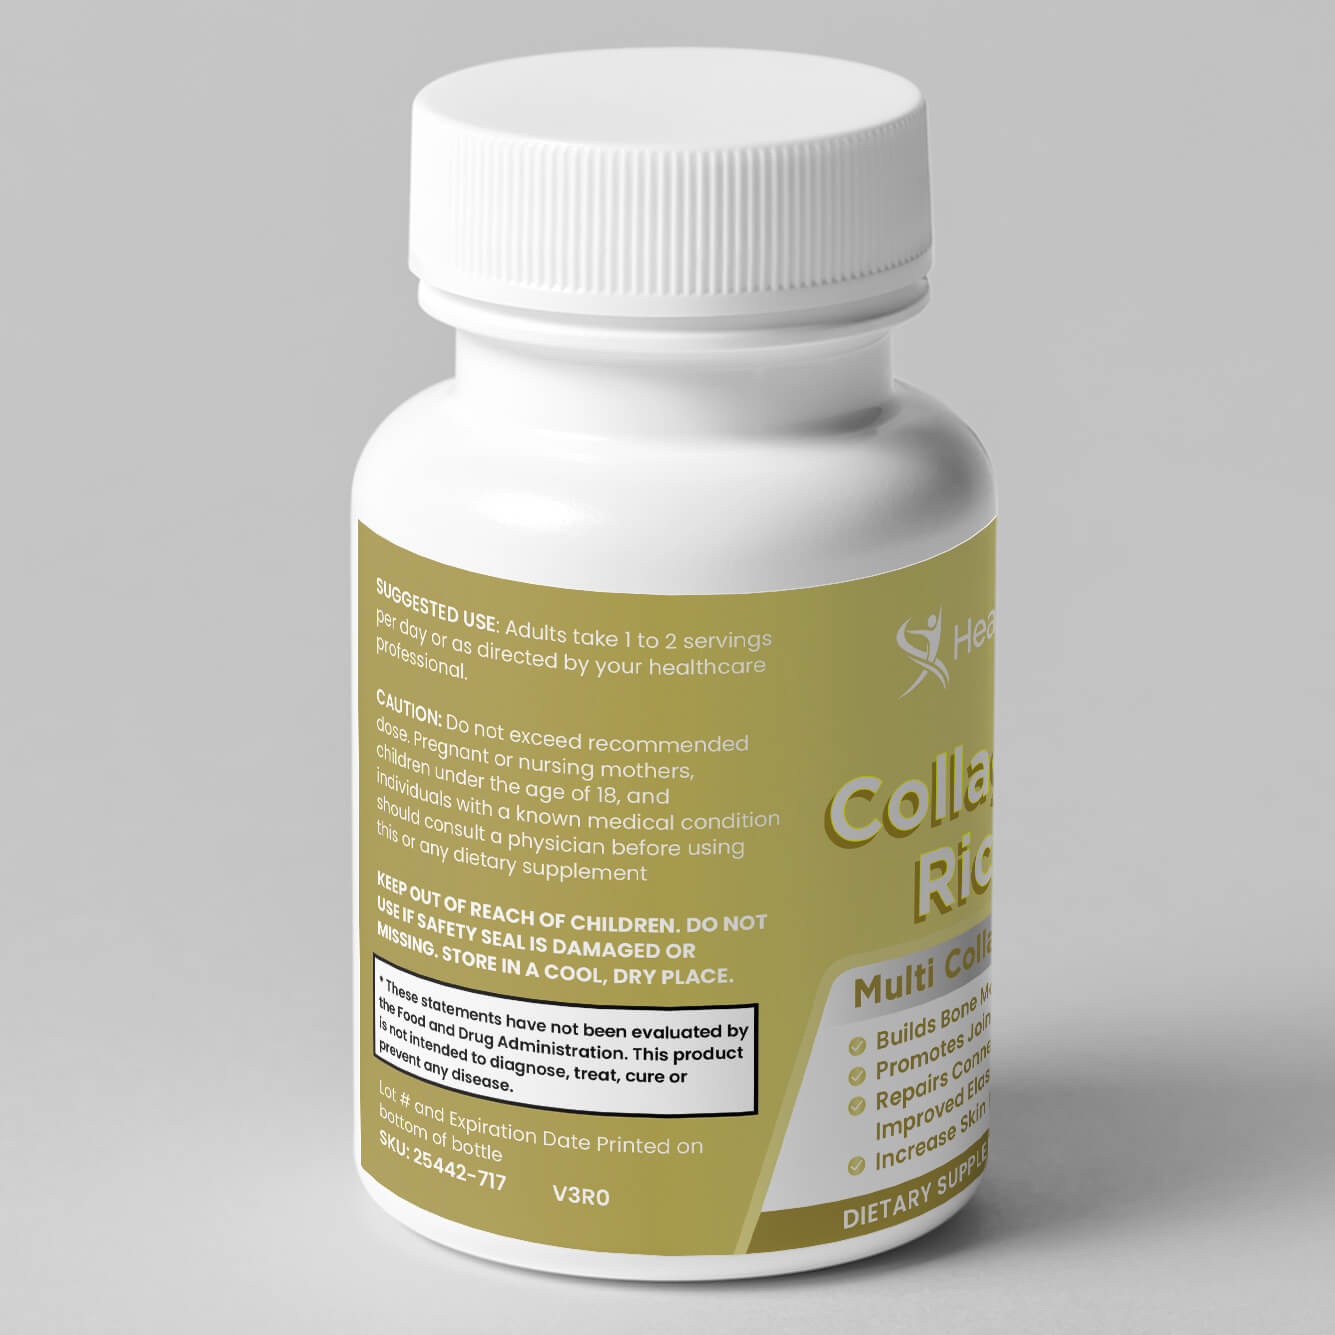 Best Collagen Supplements For Women